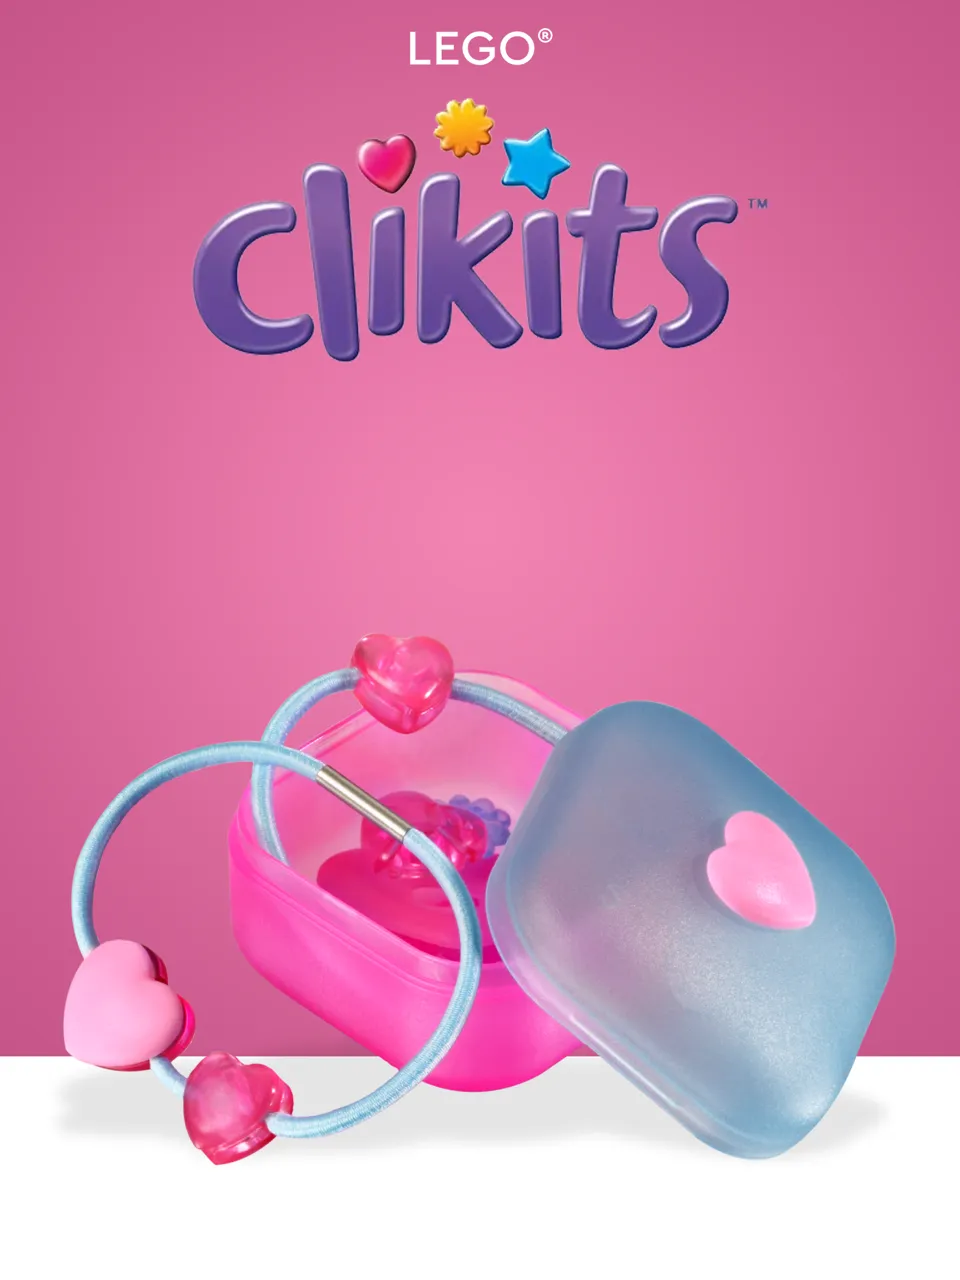 CLIKITS